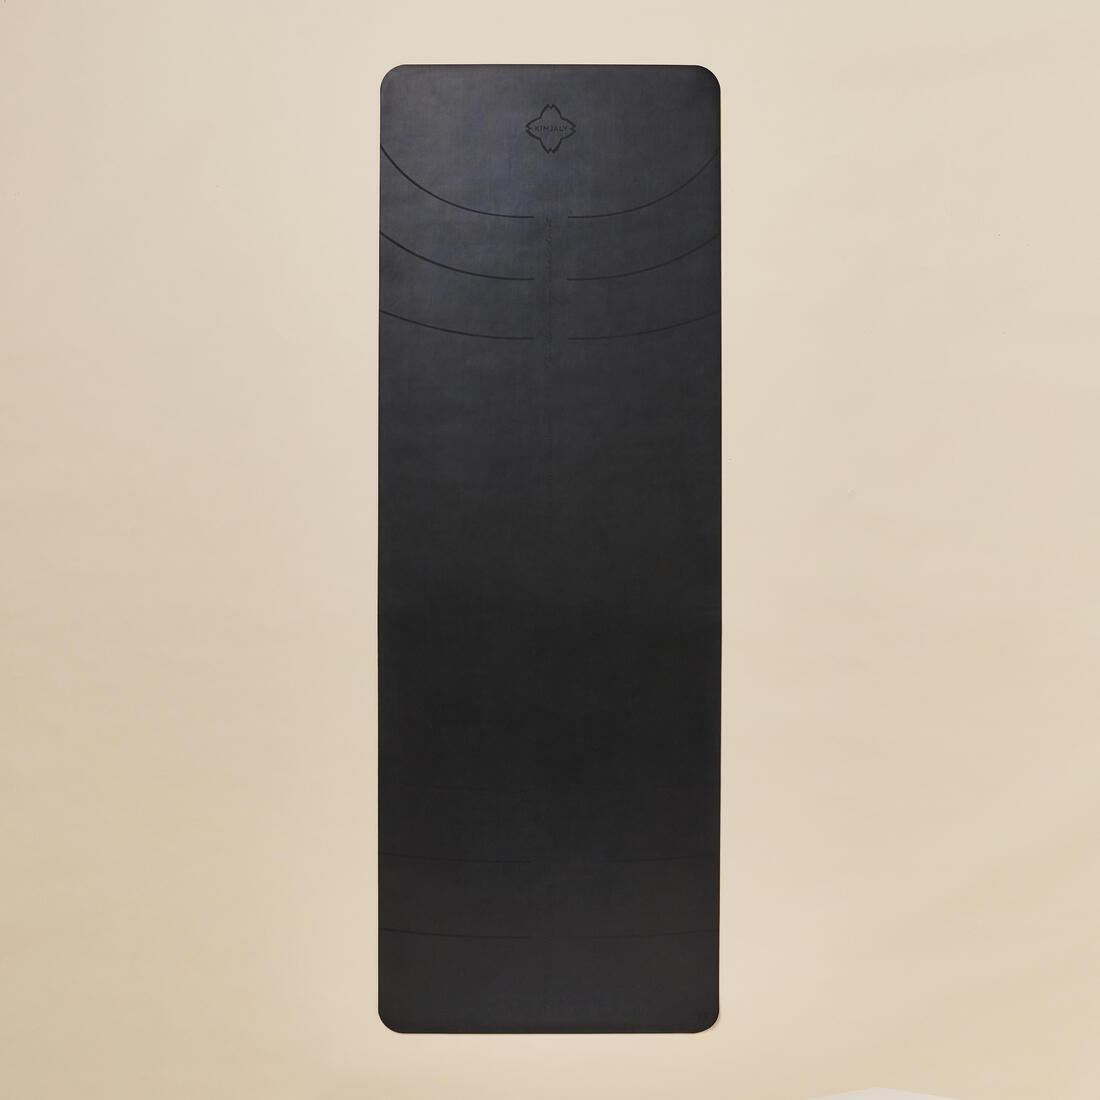 KIMJALY - Yoga Mat Grip - 185Cm X 65Cm X 3Mm, Blue